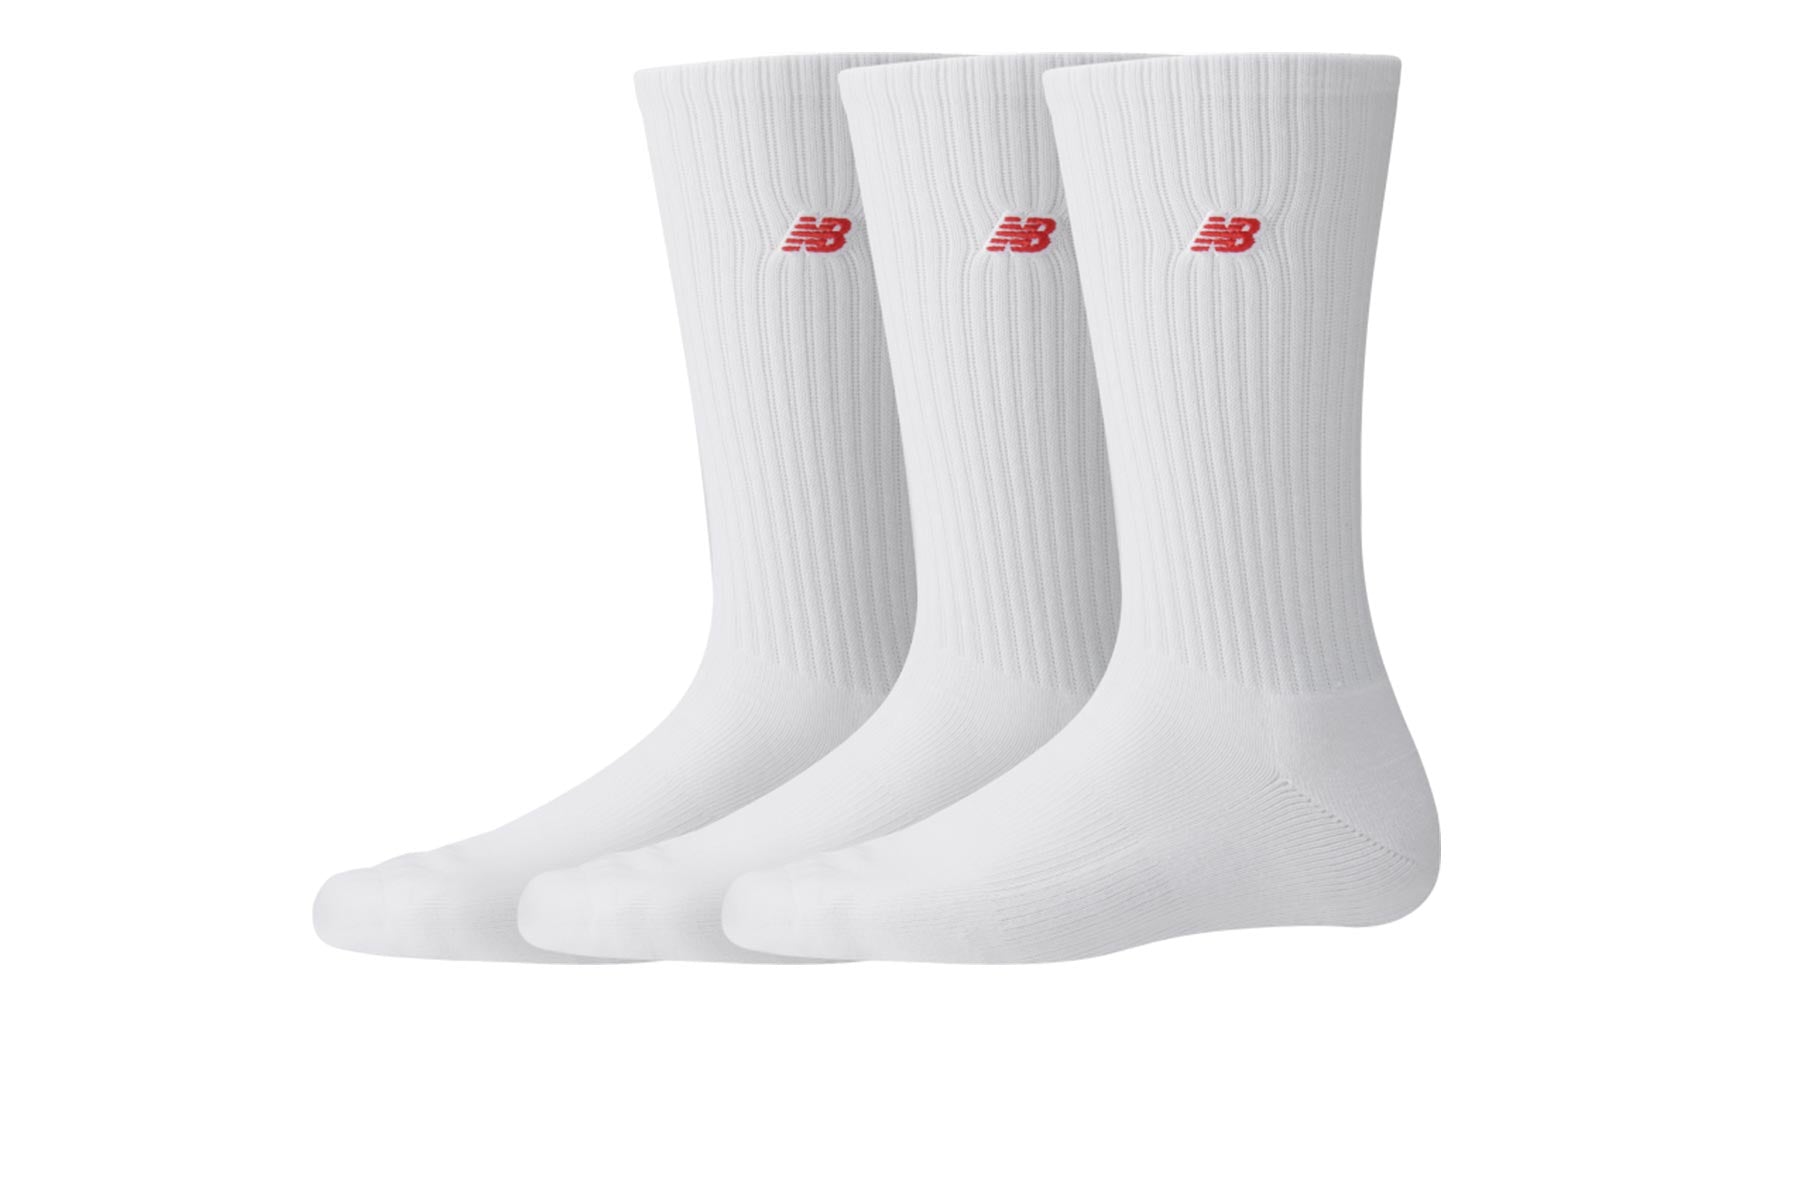 New Balance Patch Crew Socks (3 Pack) - White